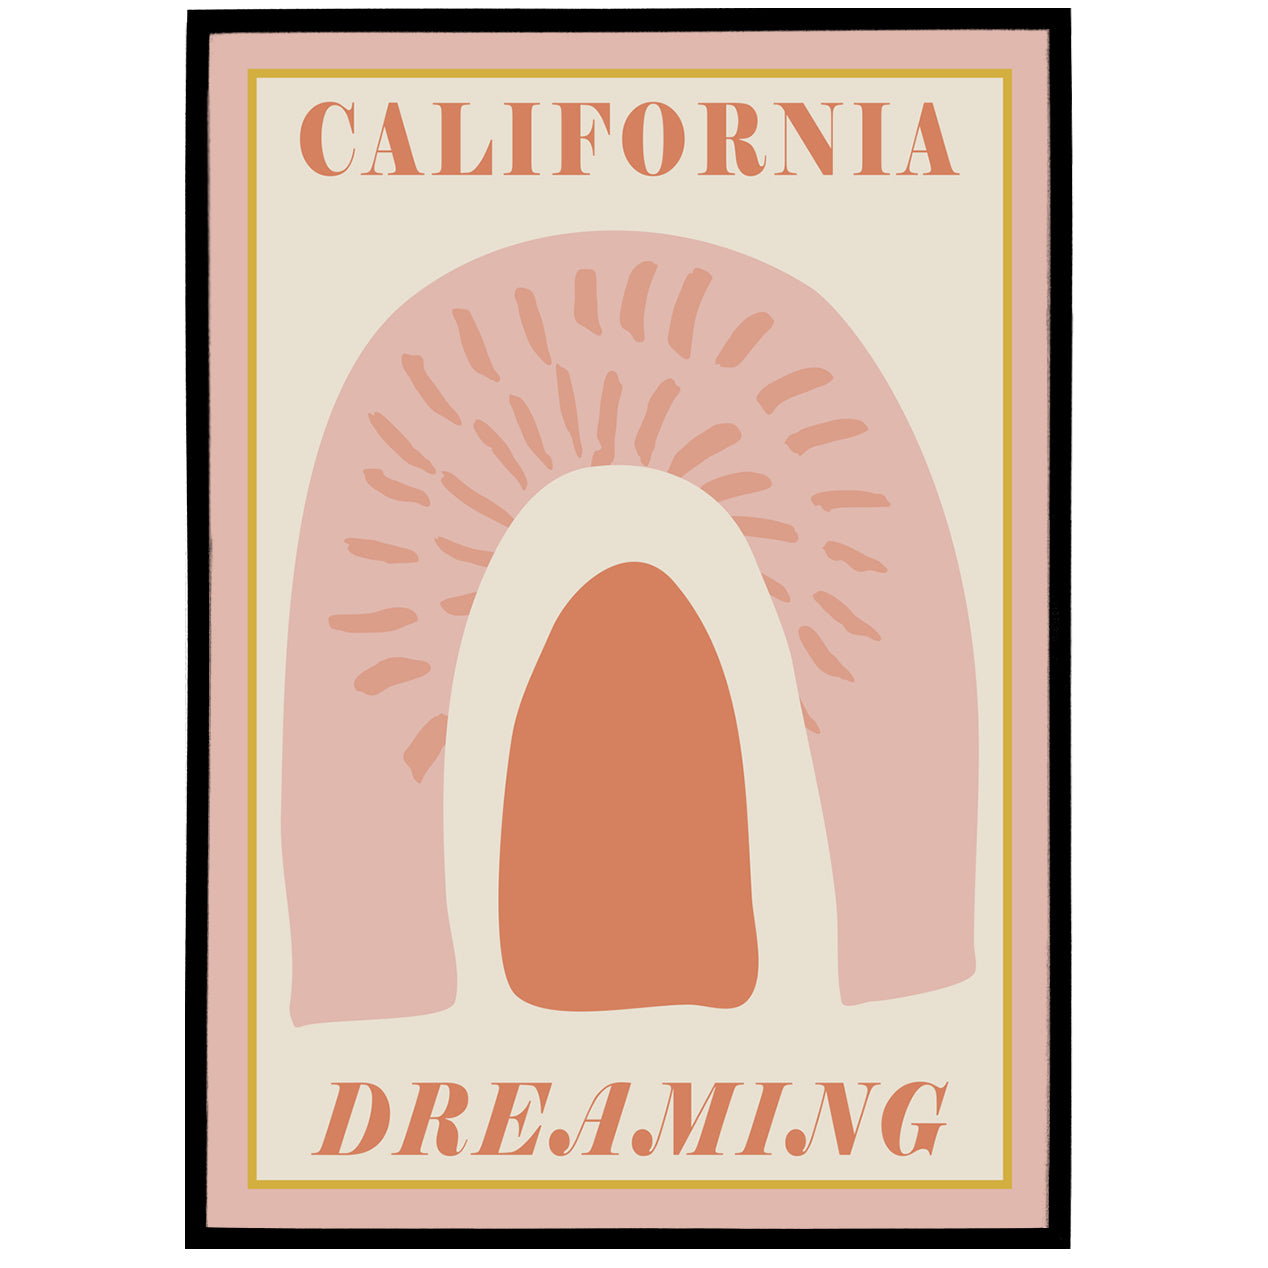 California Dreaming Poster